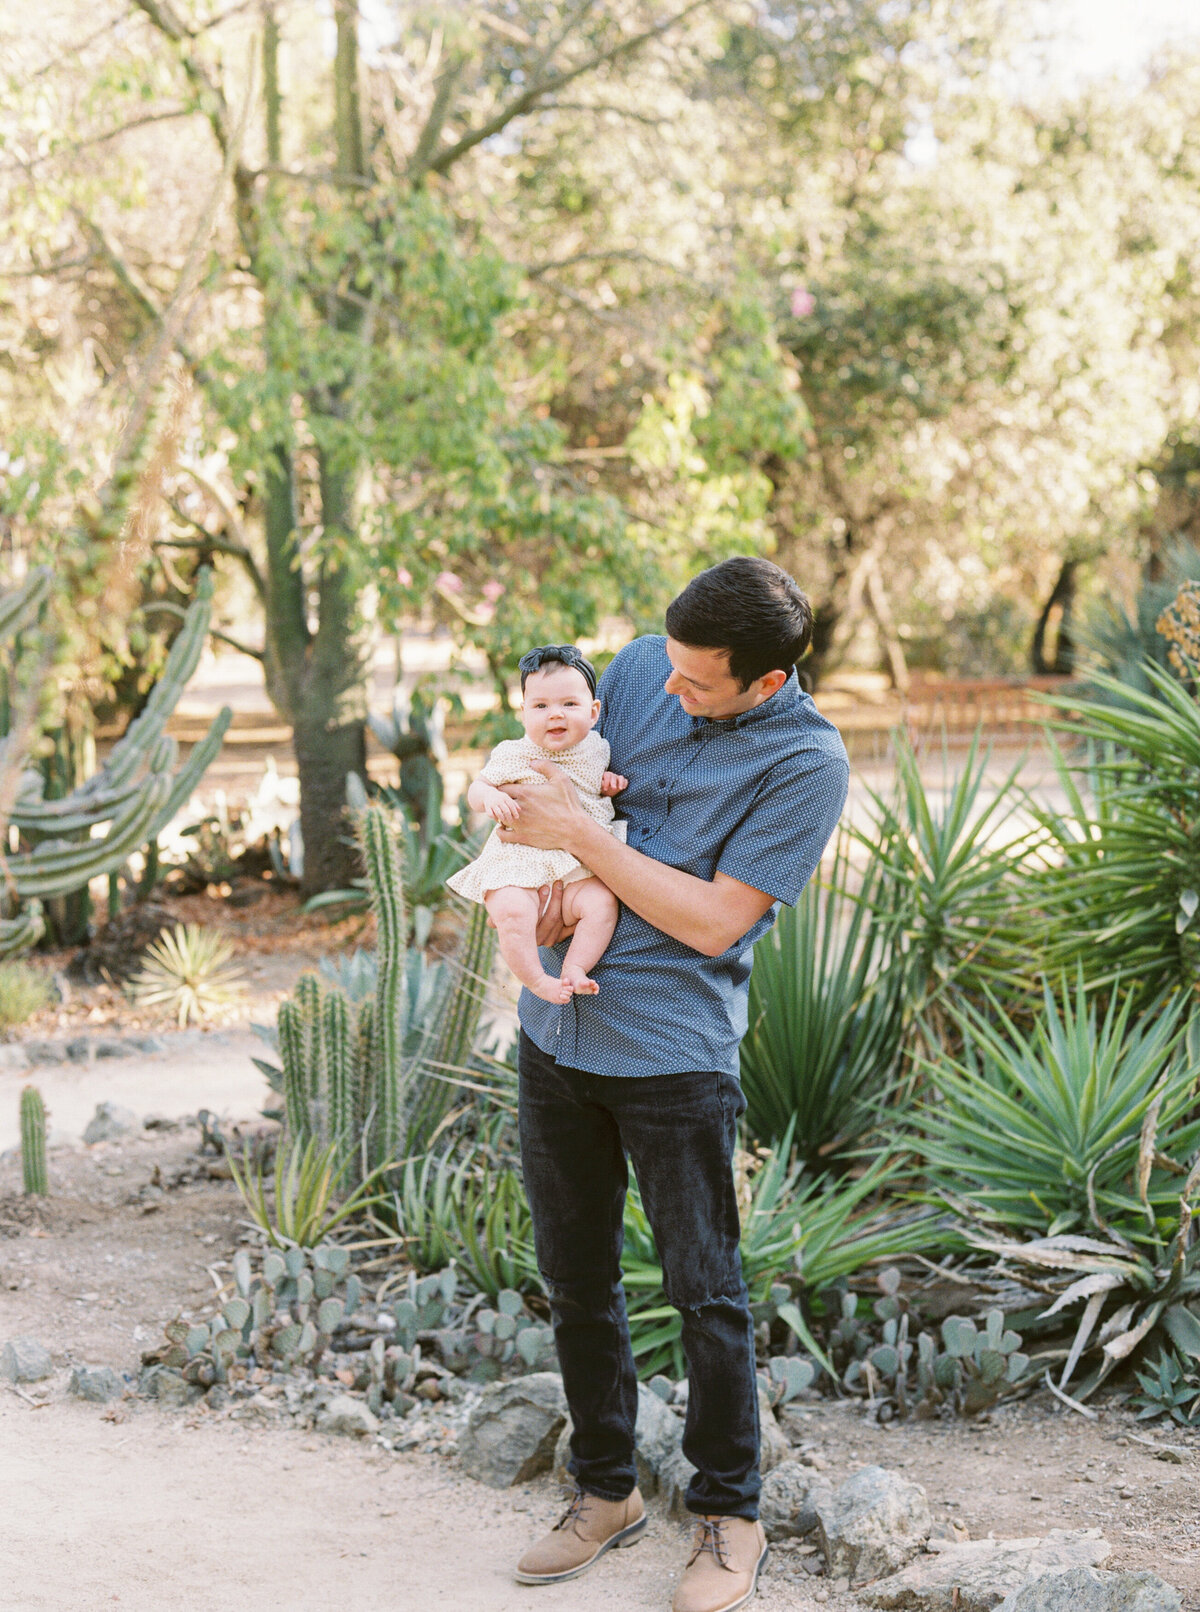 Olivia Marshall Photography- Cactus Desert Garden Family Photos-9